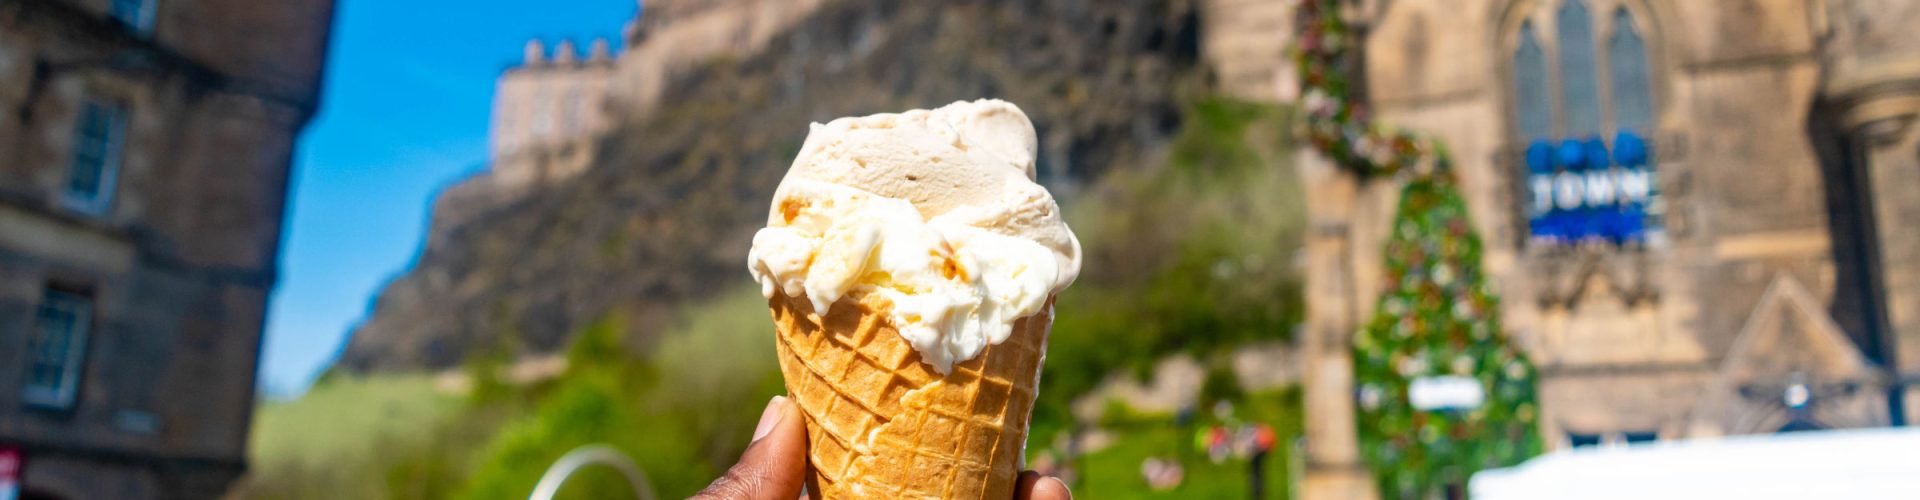 Hand holding an ice cream on a sunny day in Edinburgh's Grassmarket